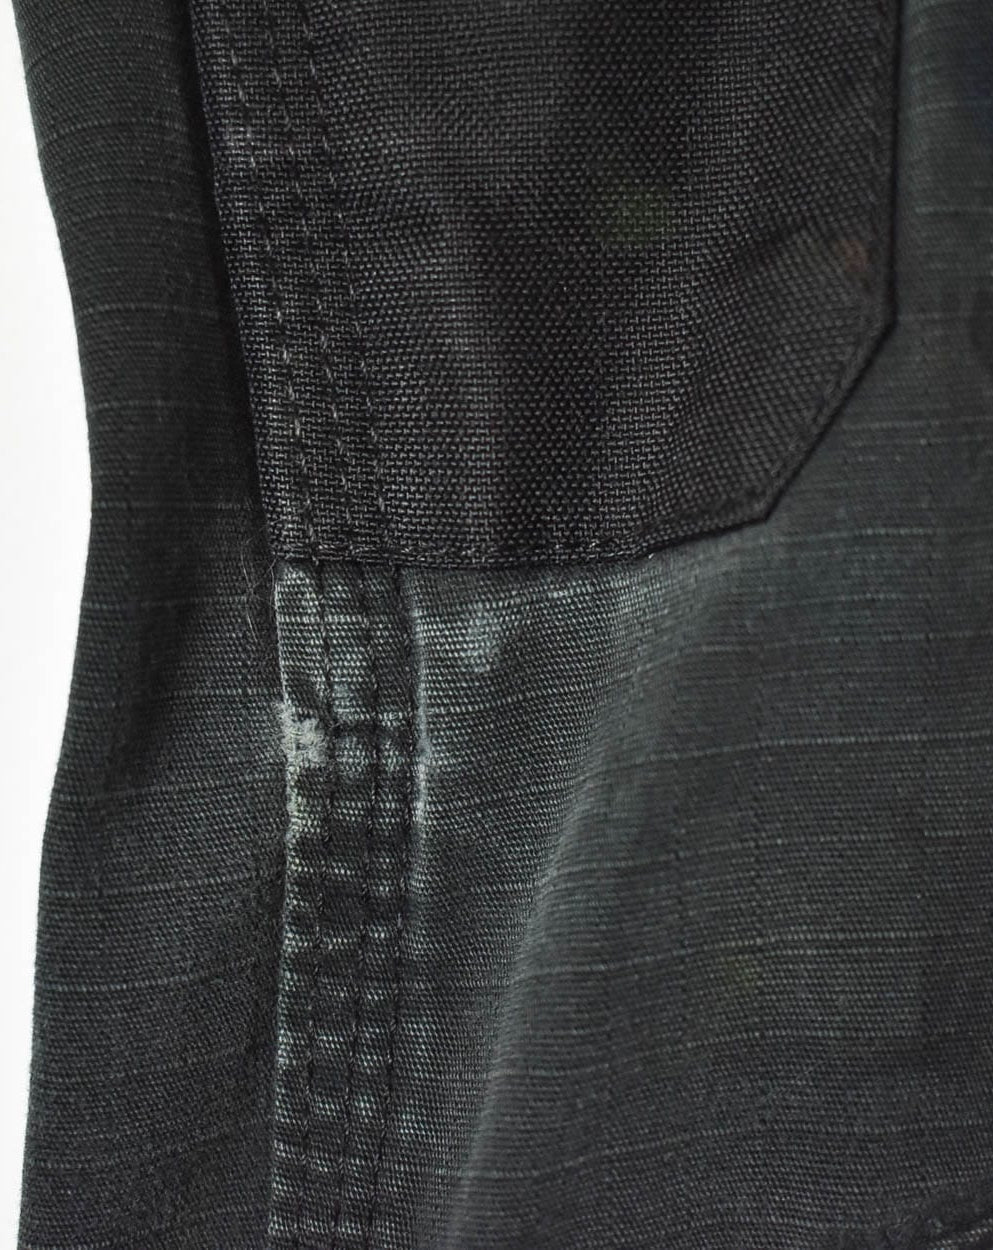 Black Carhartt Double Knee Carpenter Jeans - W42 L30